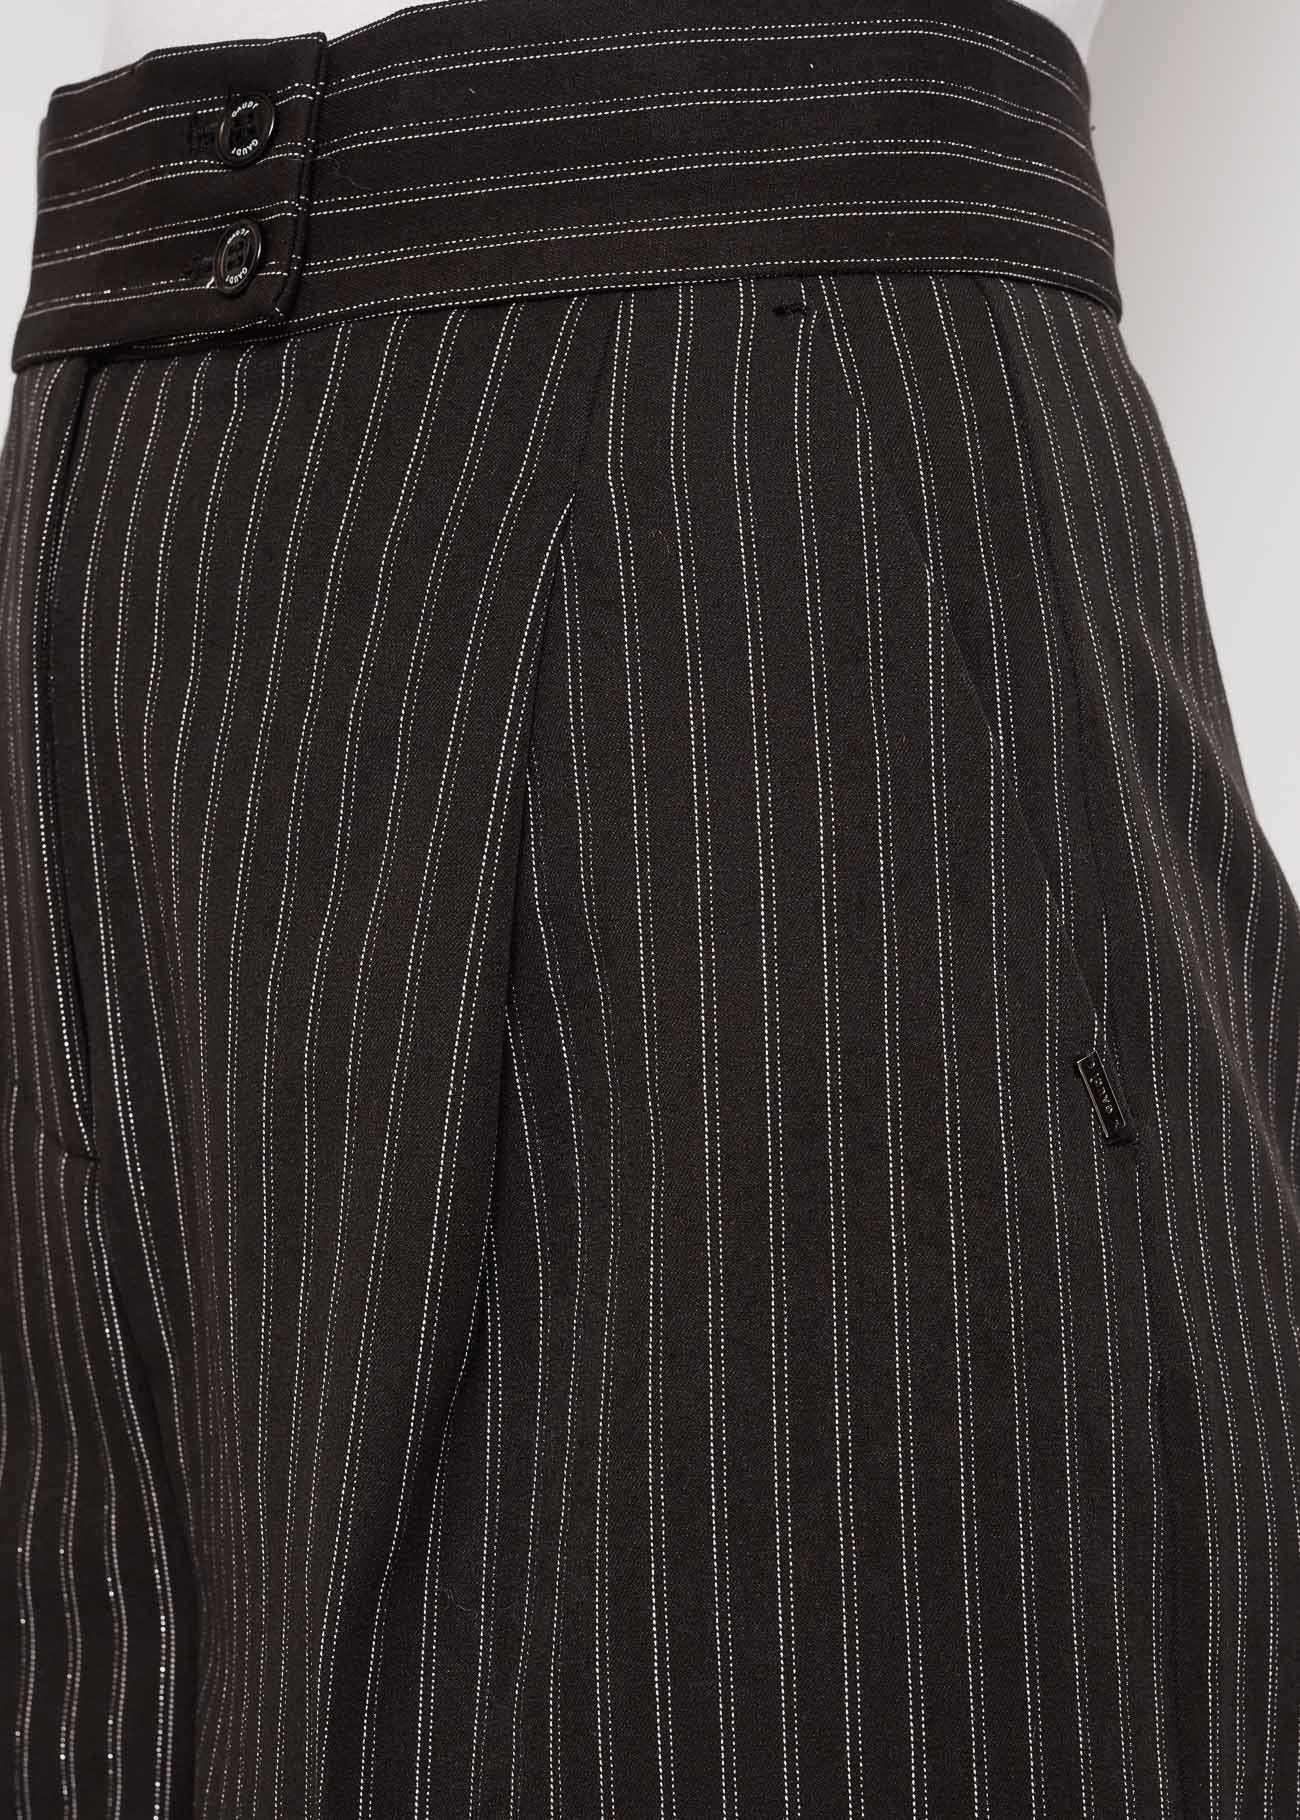 Striped shorts